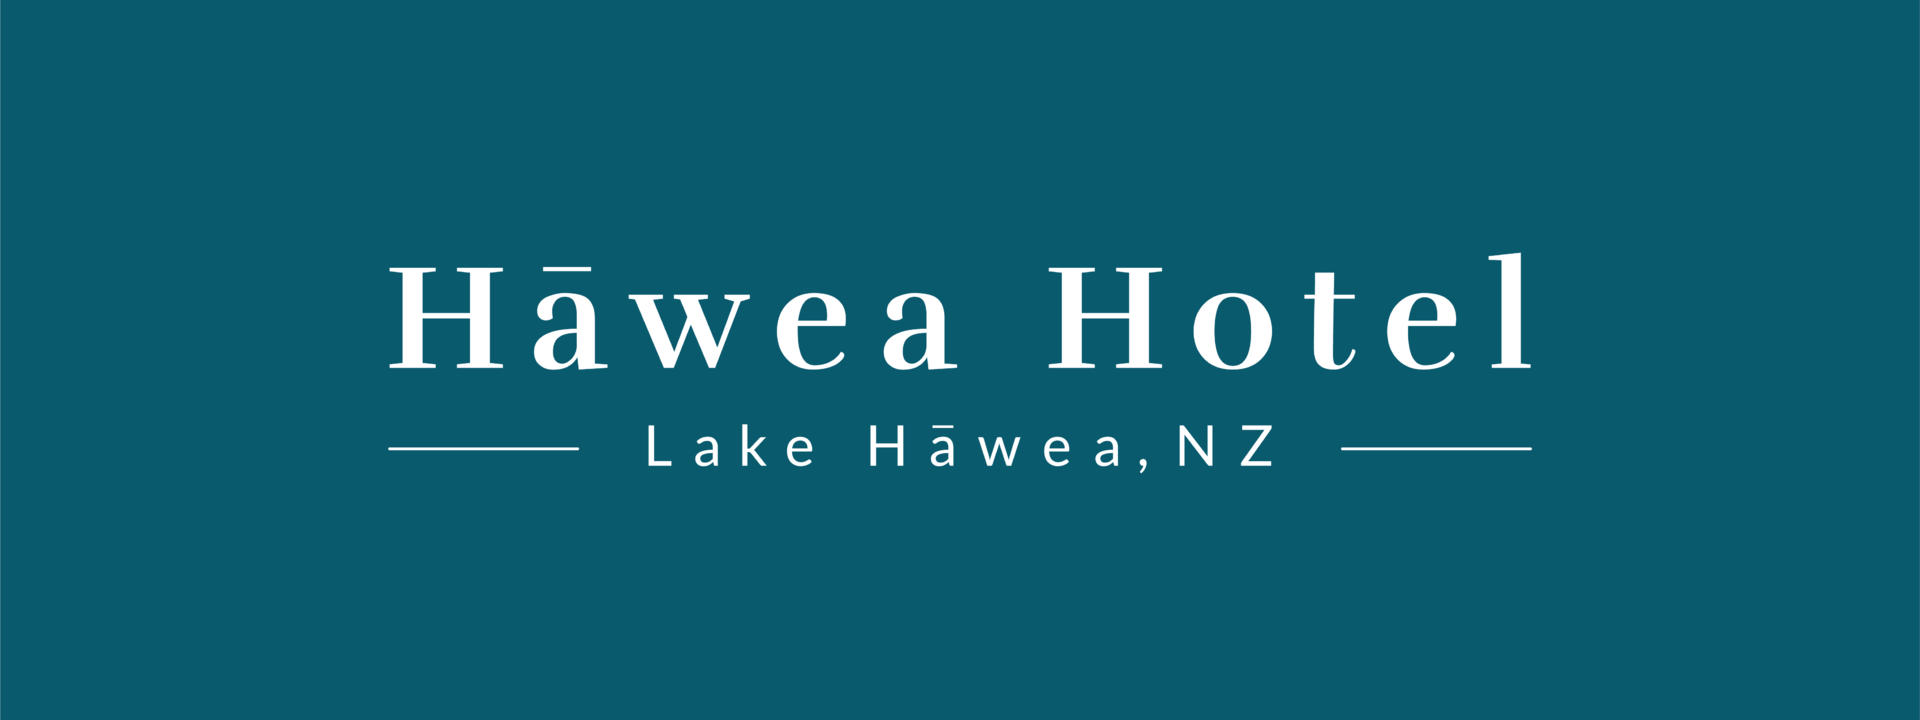 hawea-hotel-logo-2_white-blue.jpg